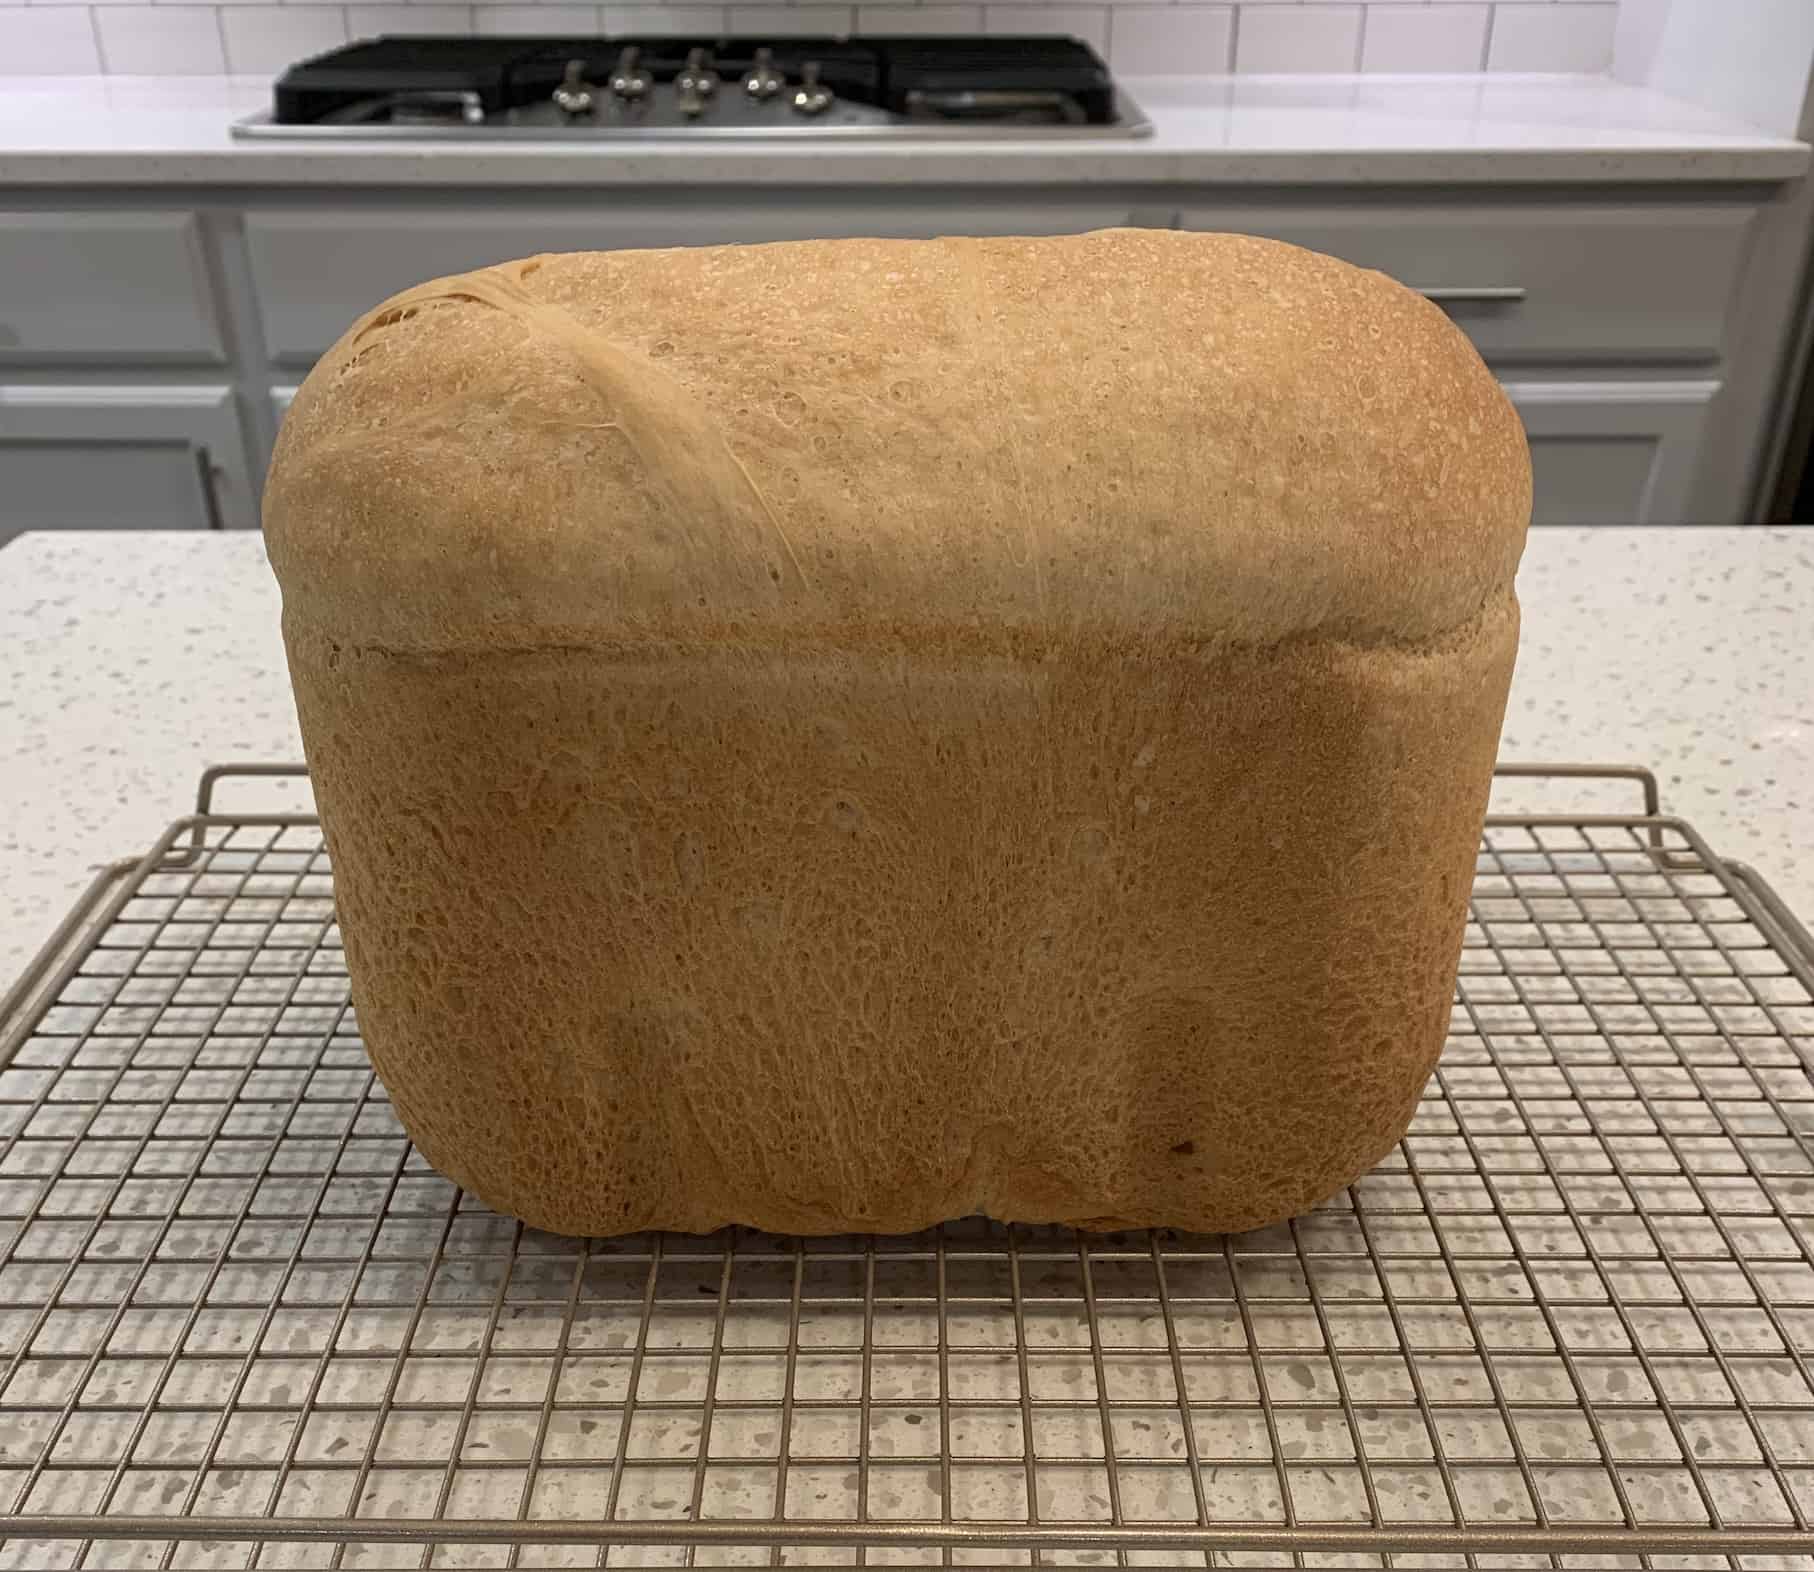 Zojirushi Breadmaker Review - Odd Name, Serious Breadmaker?